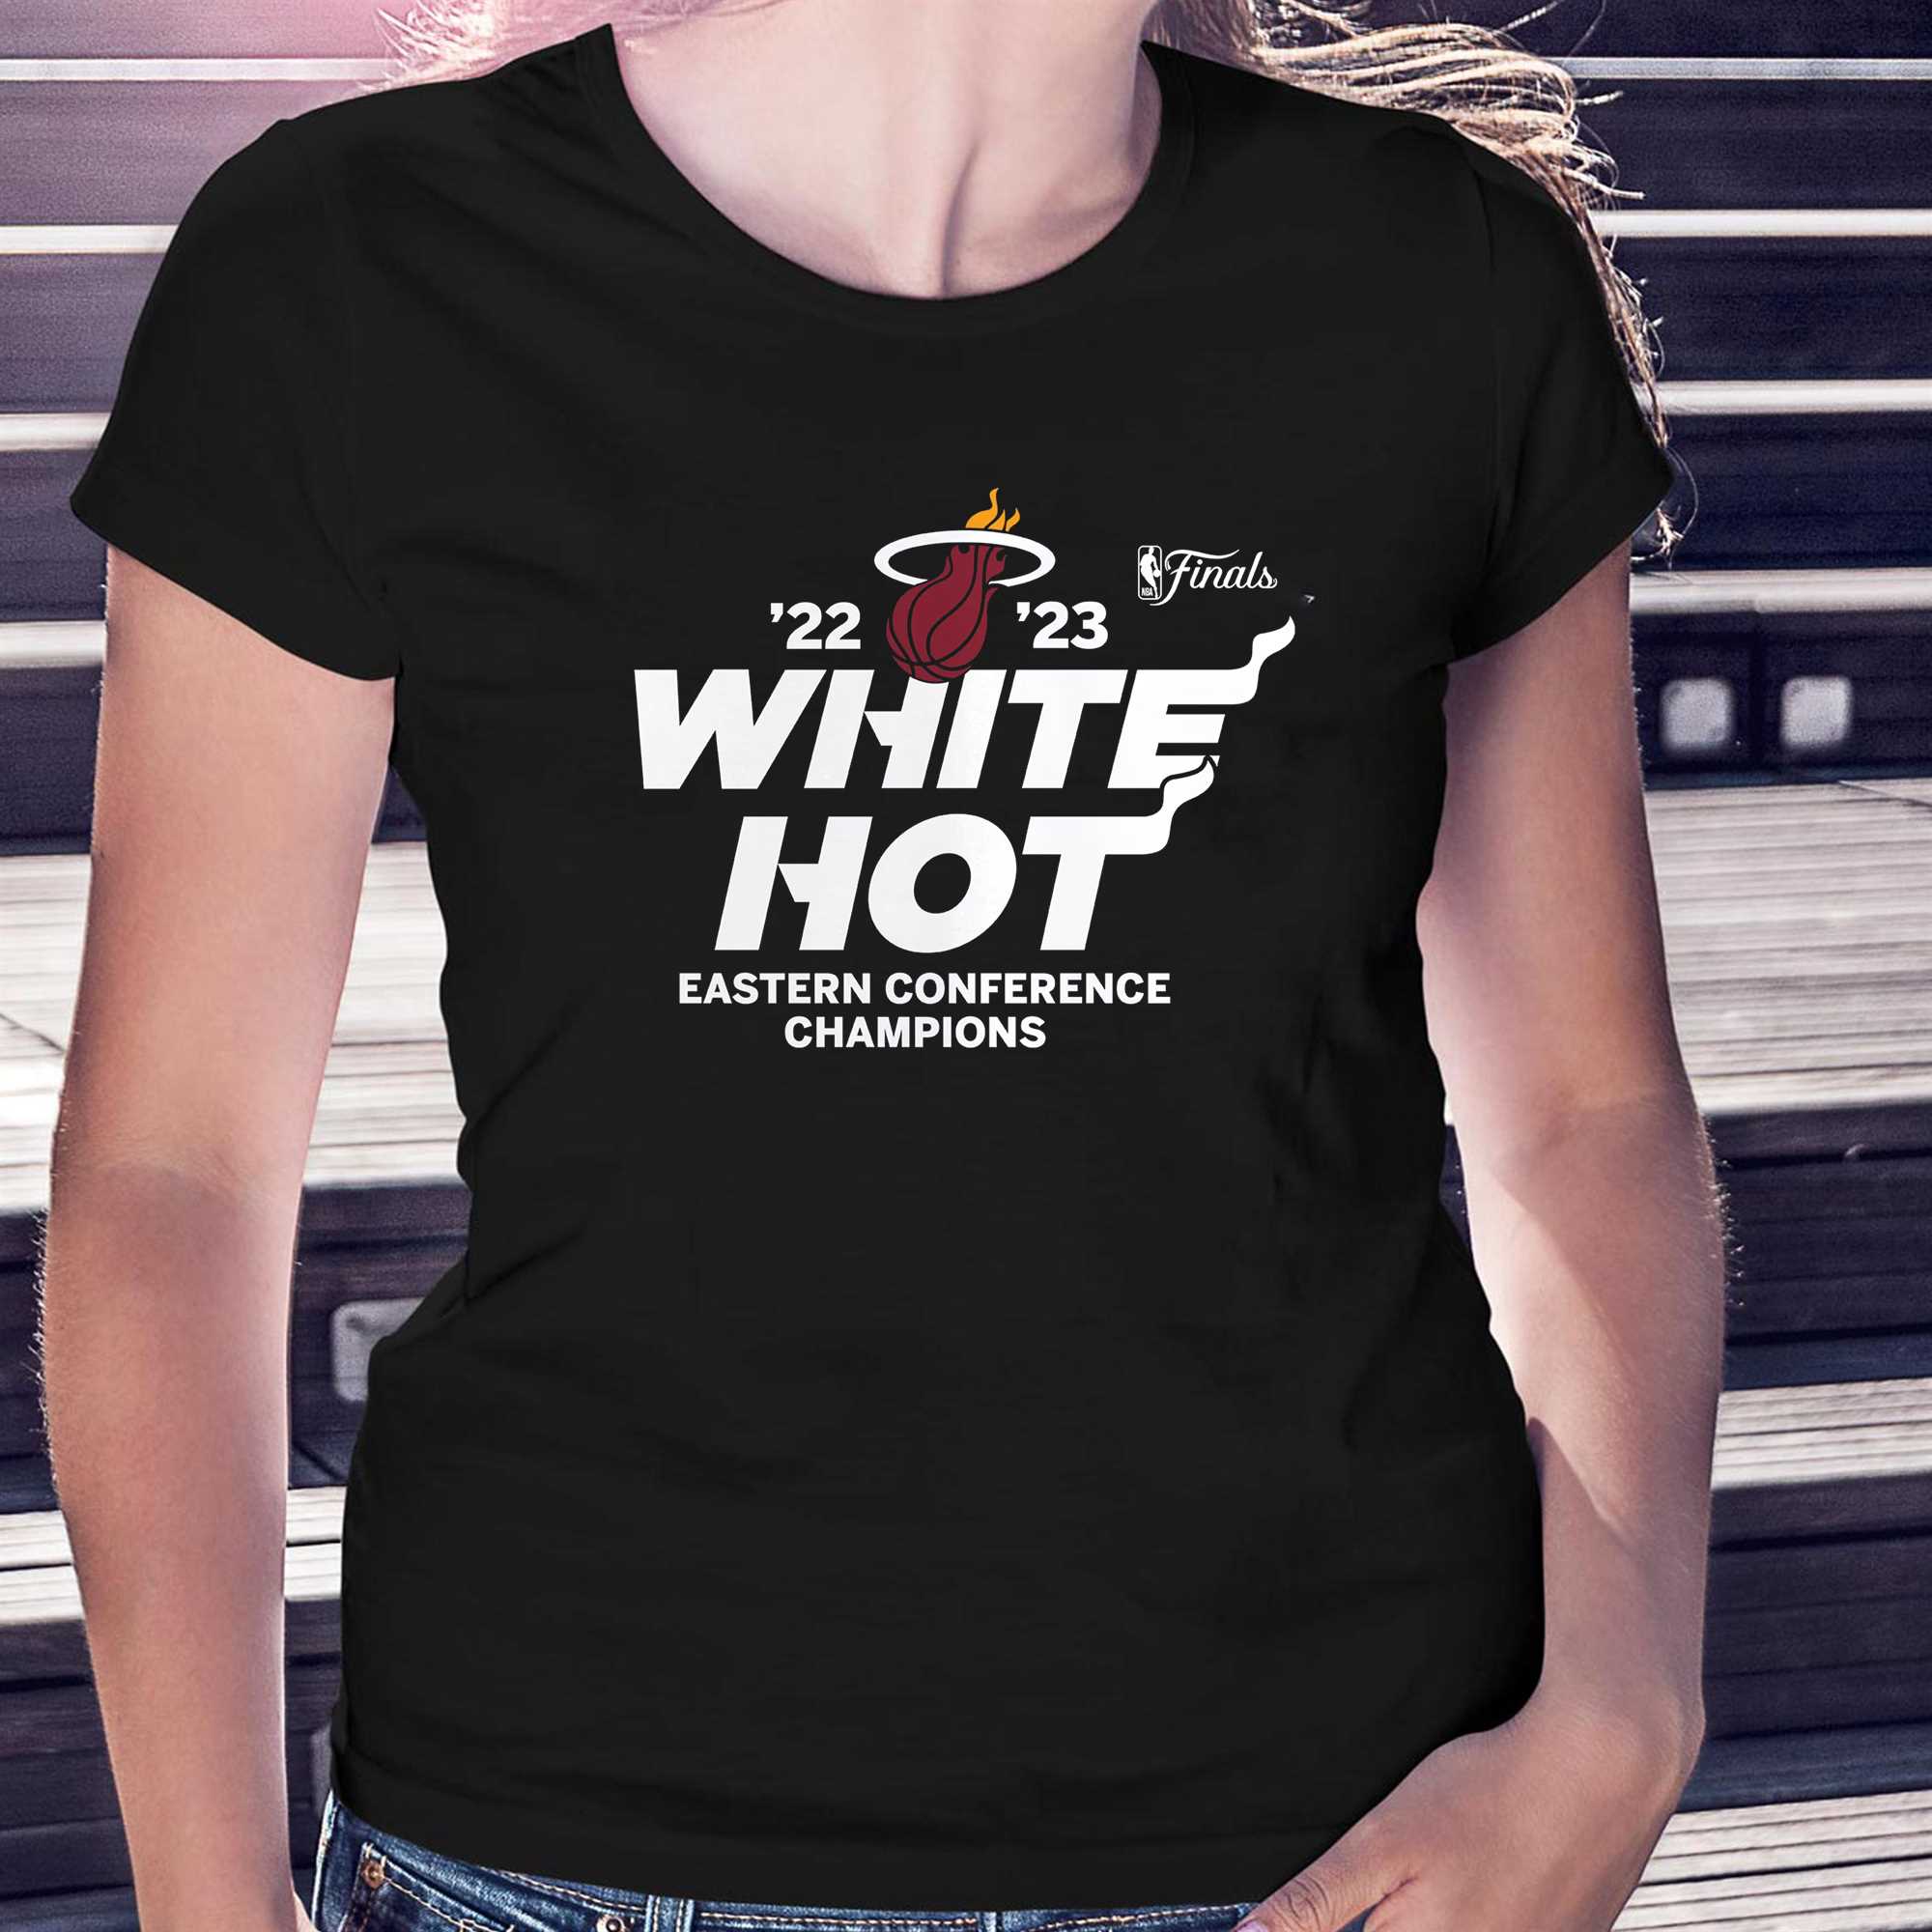 Miami Heat Court Culture Buckets Shirt - Shibtee Clothing